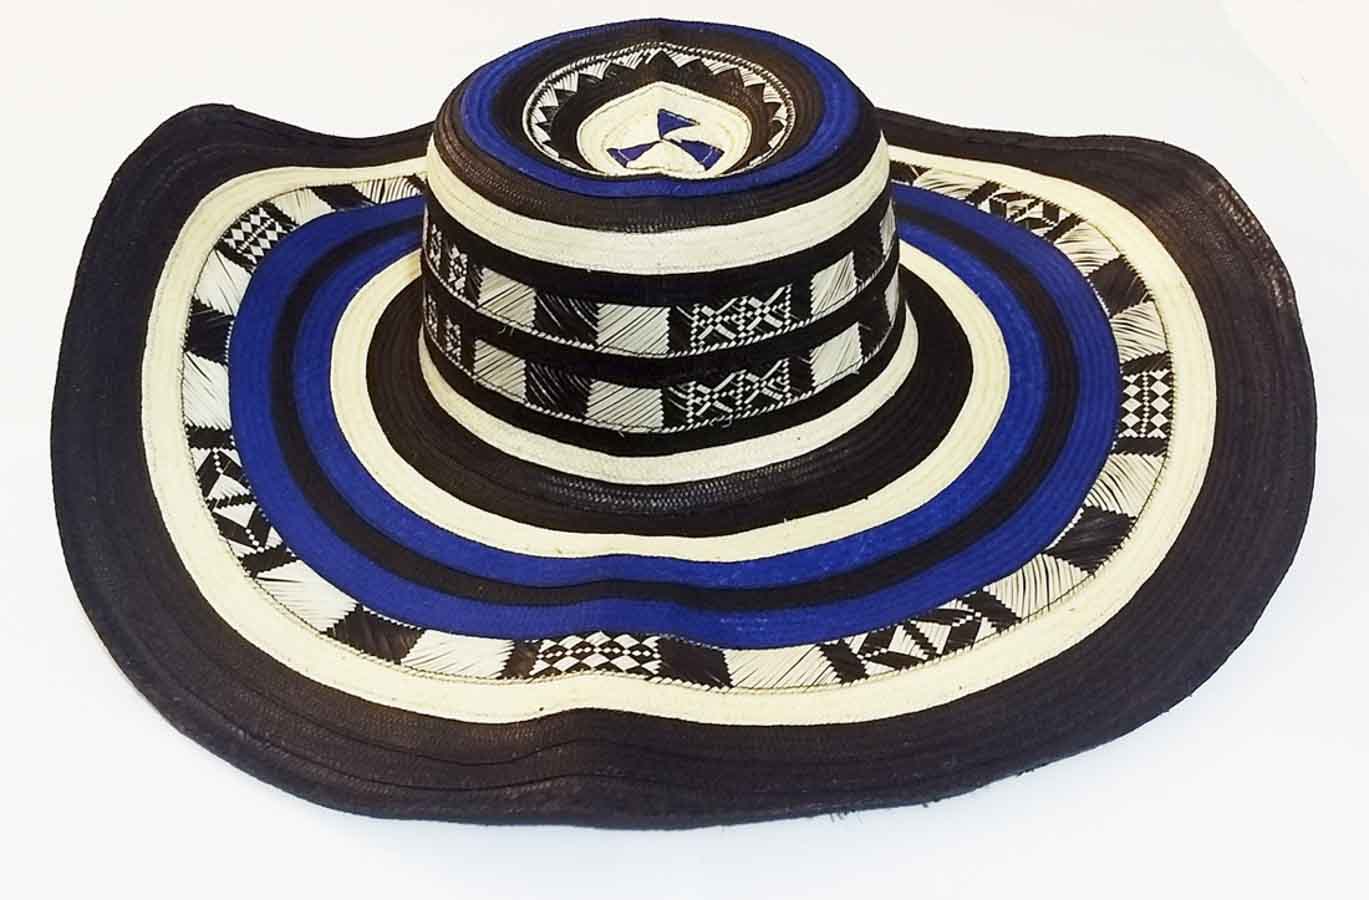 https://www.productosdecolombia.com/micrositios/sombreros-colombianos-hats/sombrero-vueltiao-21-vueltas-azul-negrog.JPG